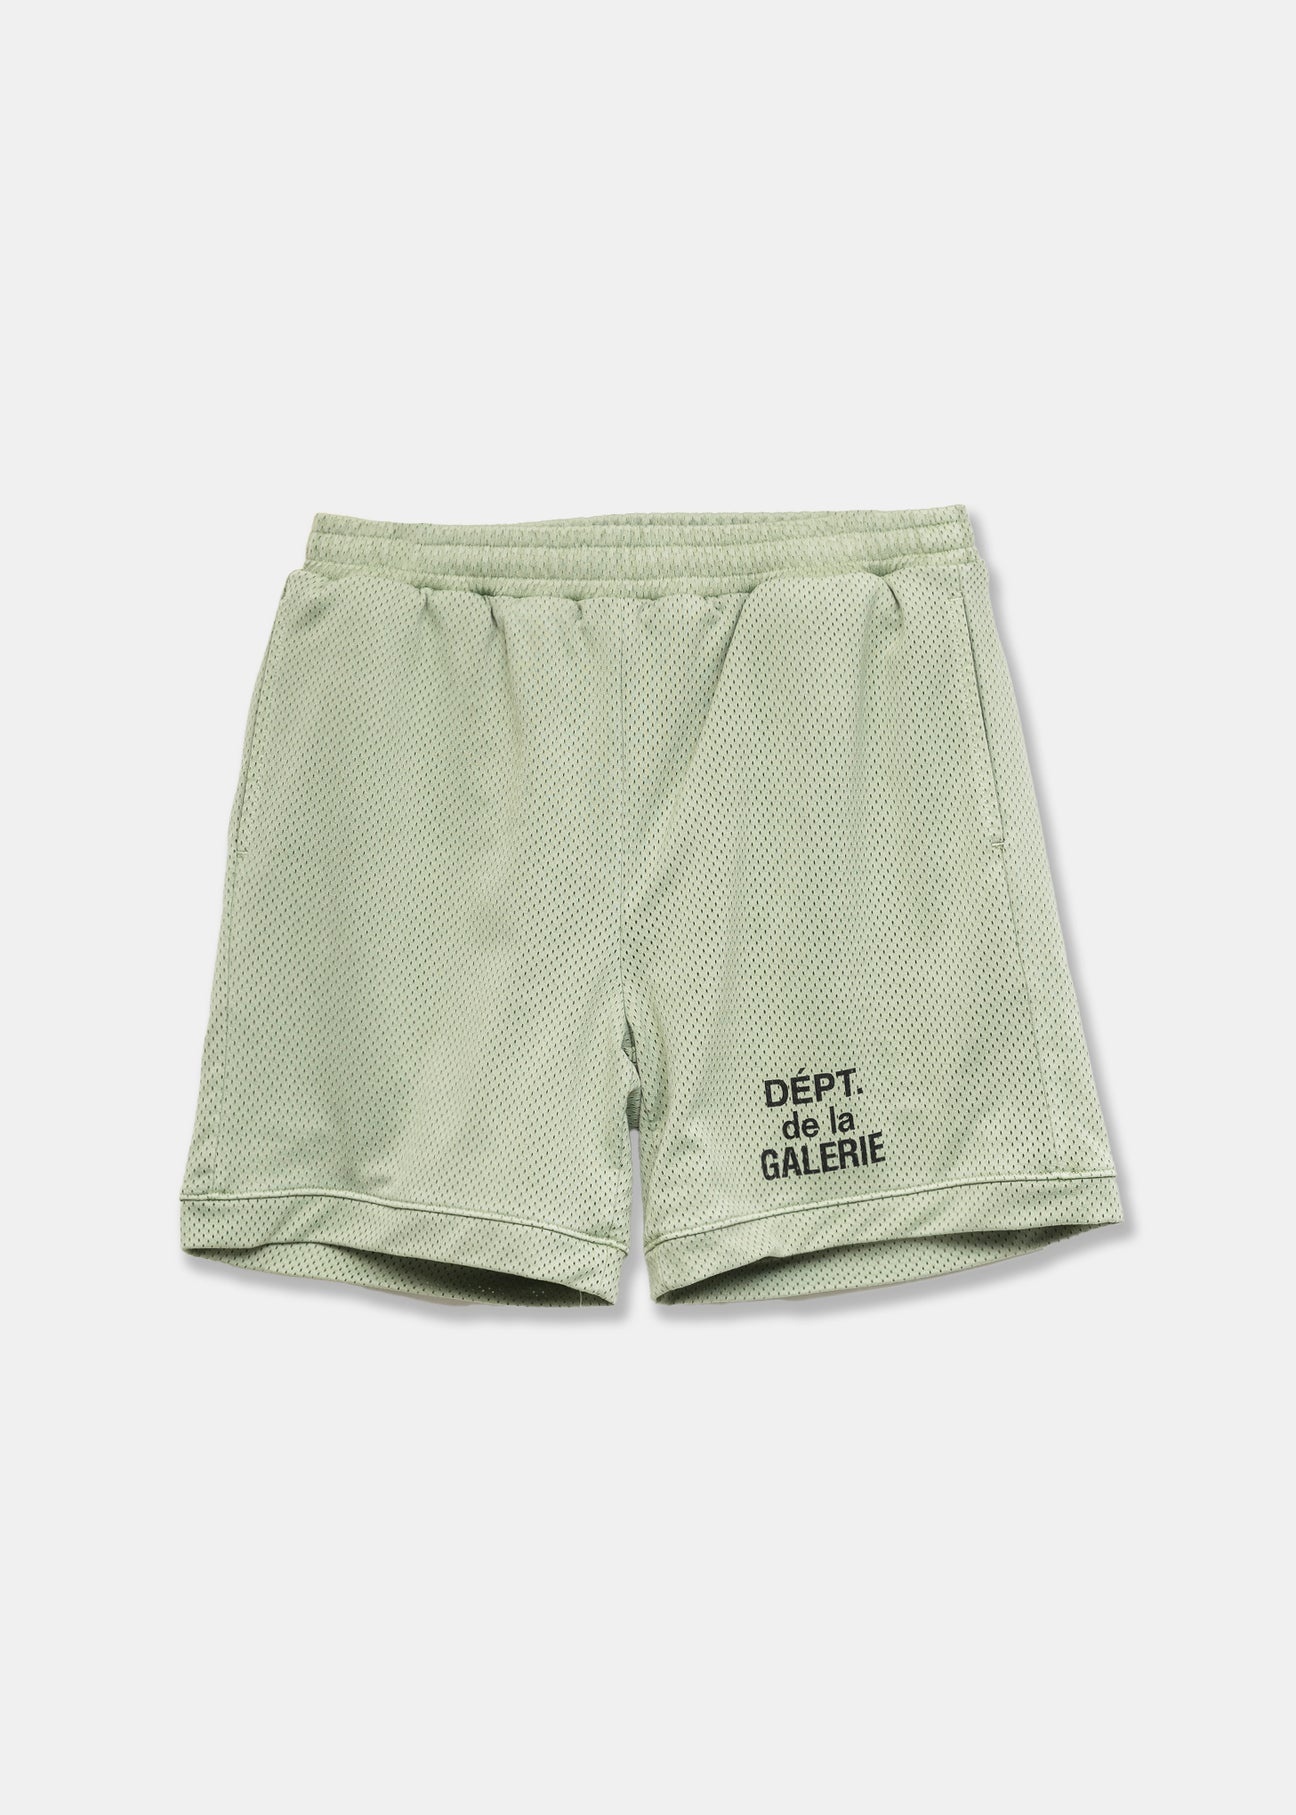 Gallery Dept French Logo Green Mesh Shorts - 1